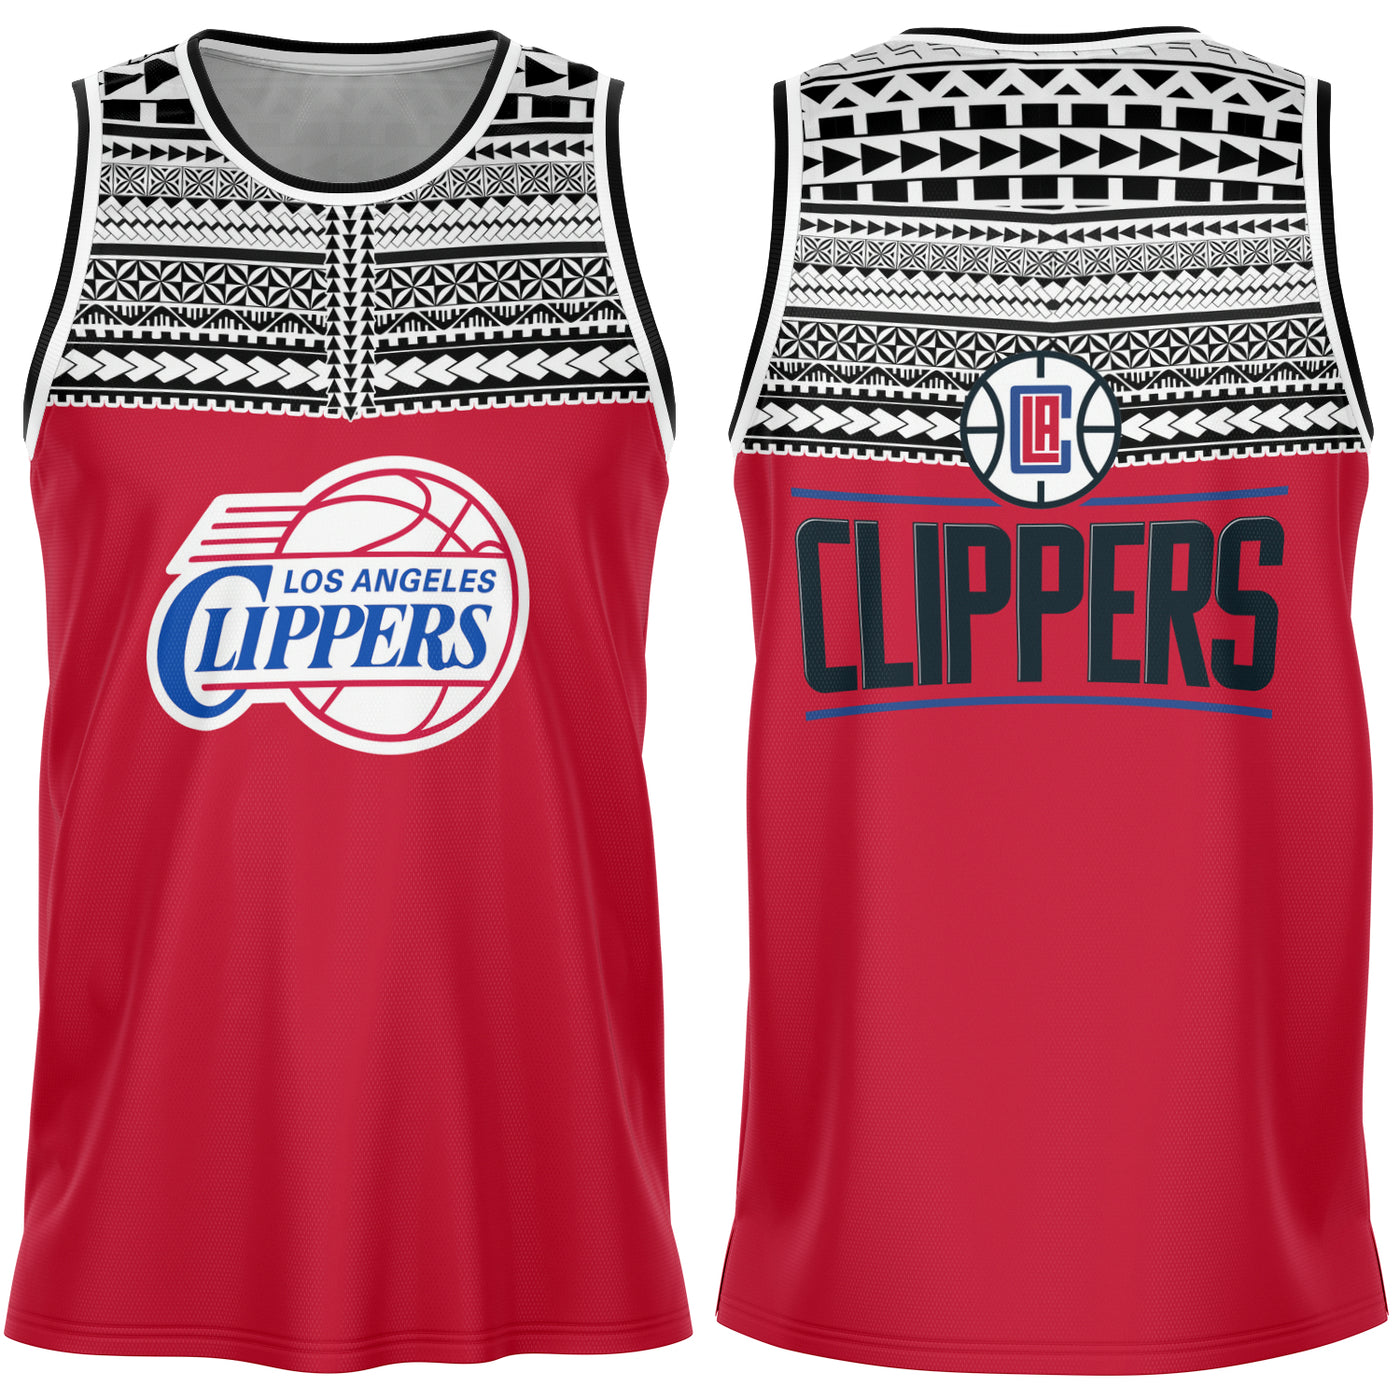 Los Angeles Clippers Gear, Los Angeles Clippers Jerseys, Store